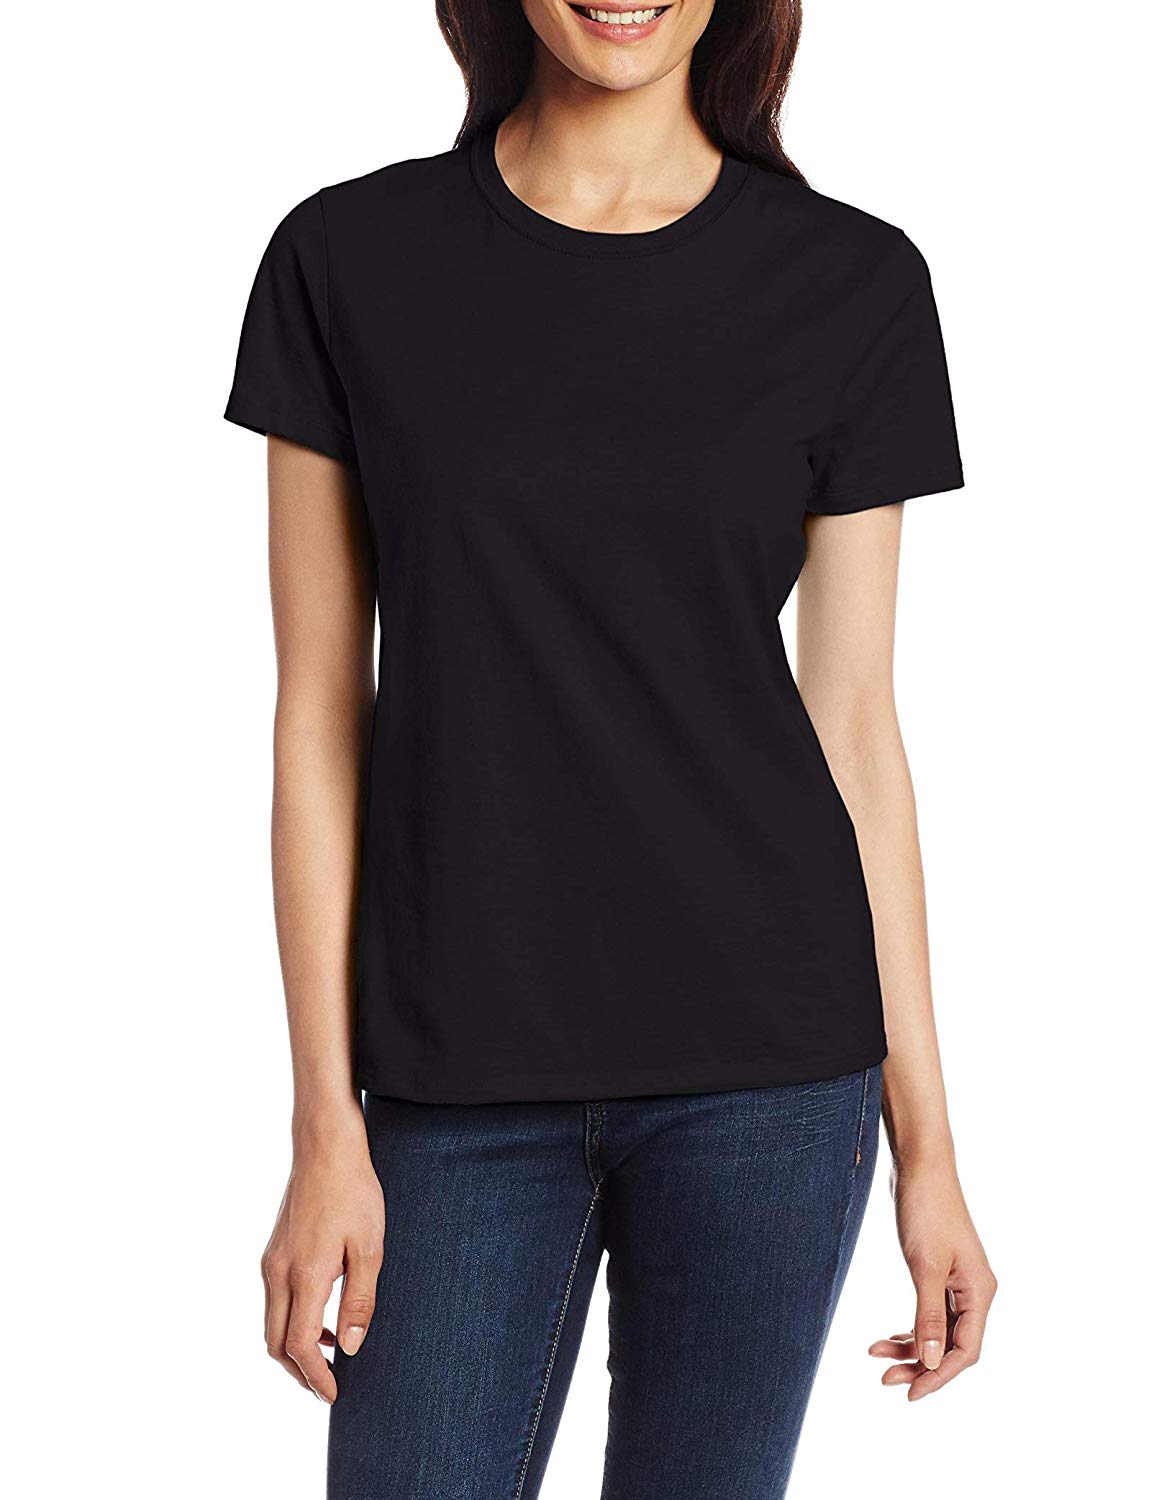 Women's Nano T-Shirt, Medium, Black, Black, Size Medium 8ef0 | eBay